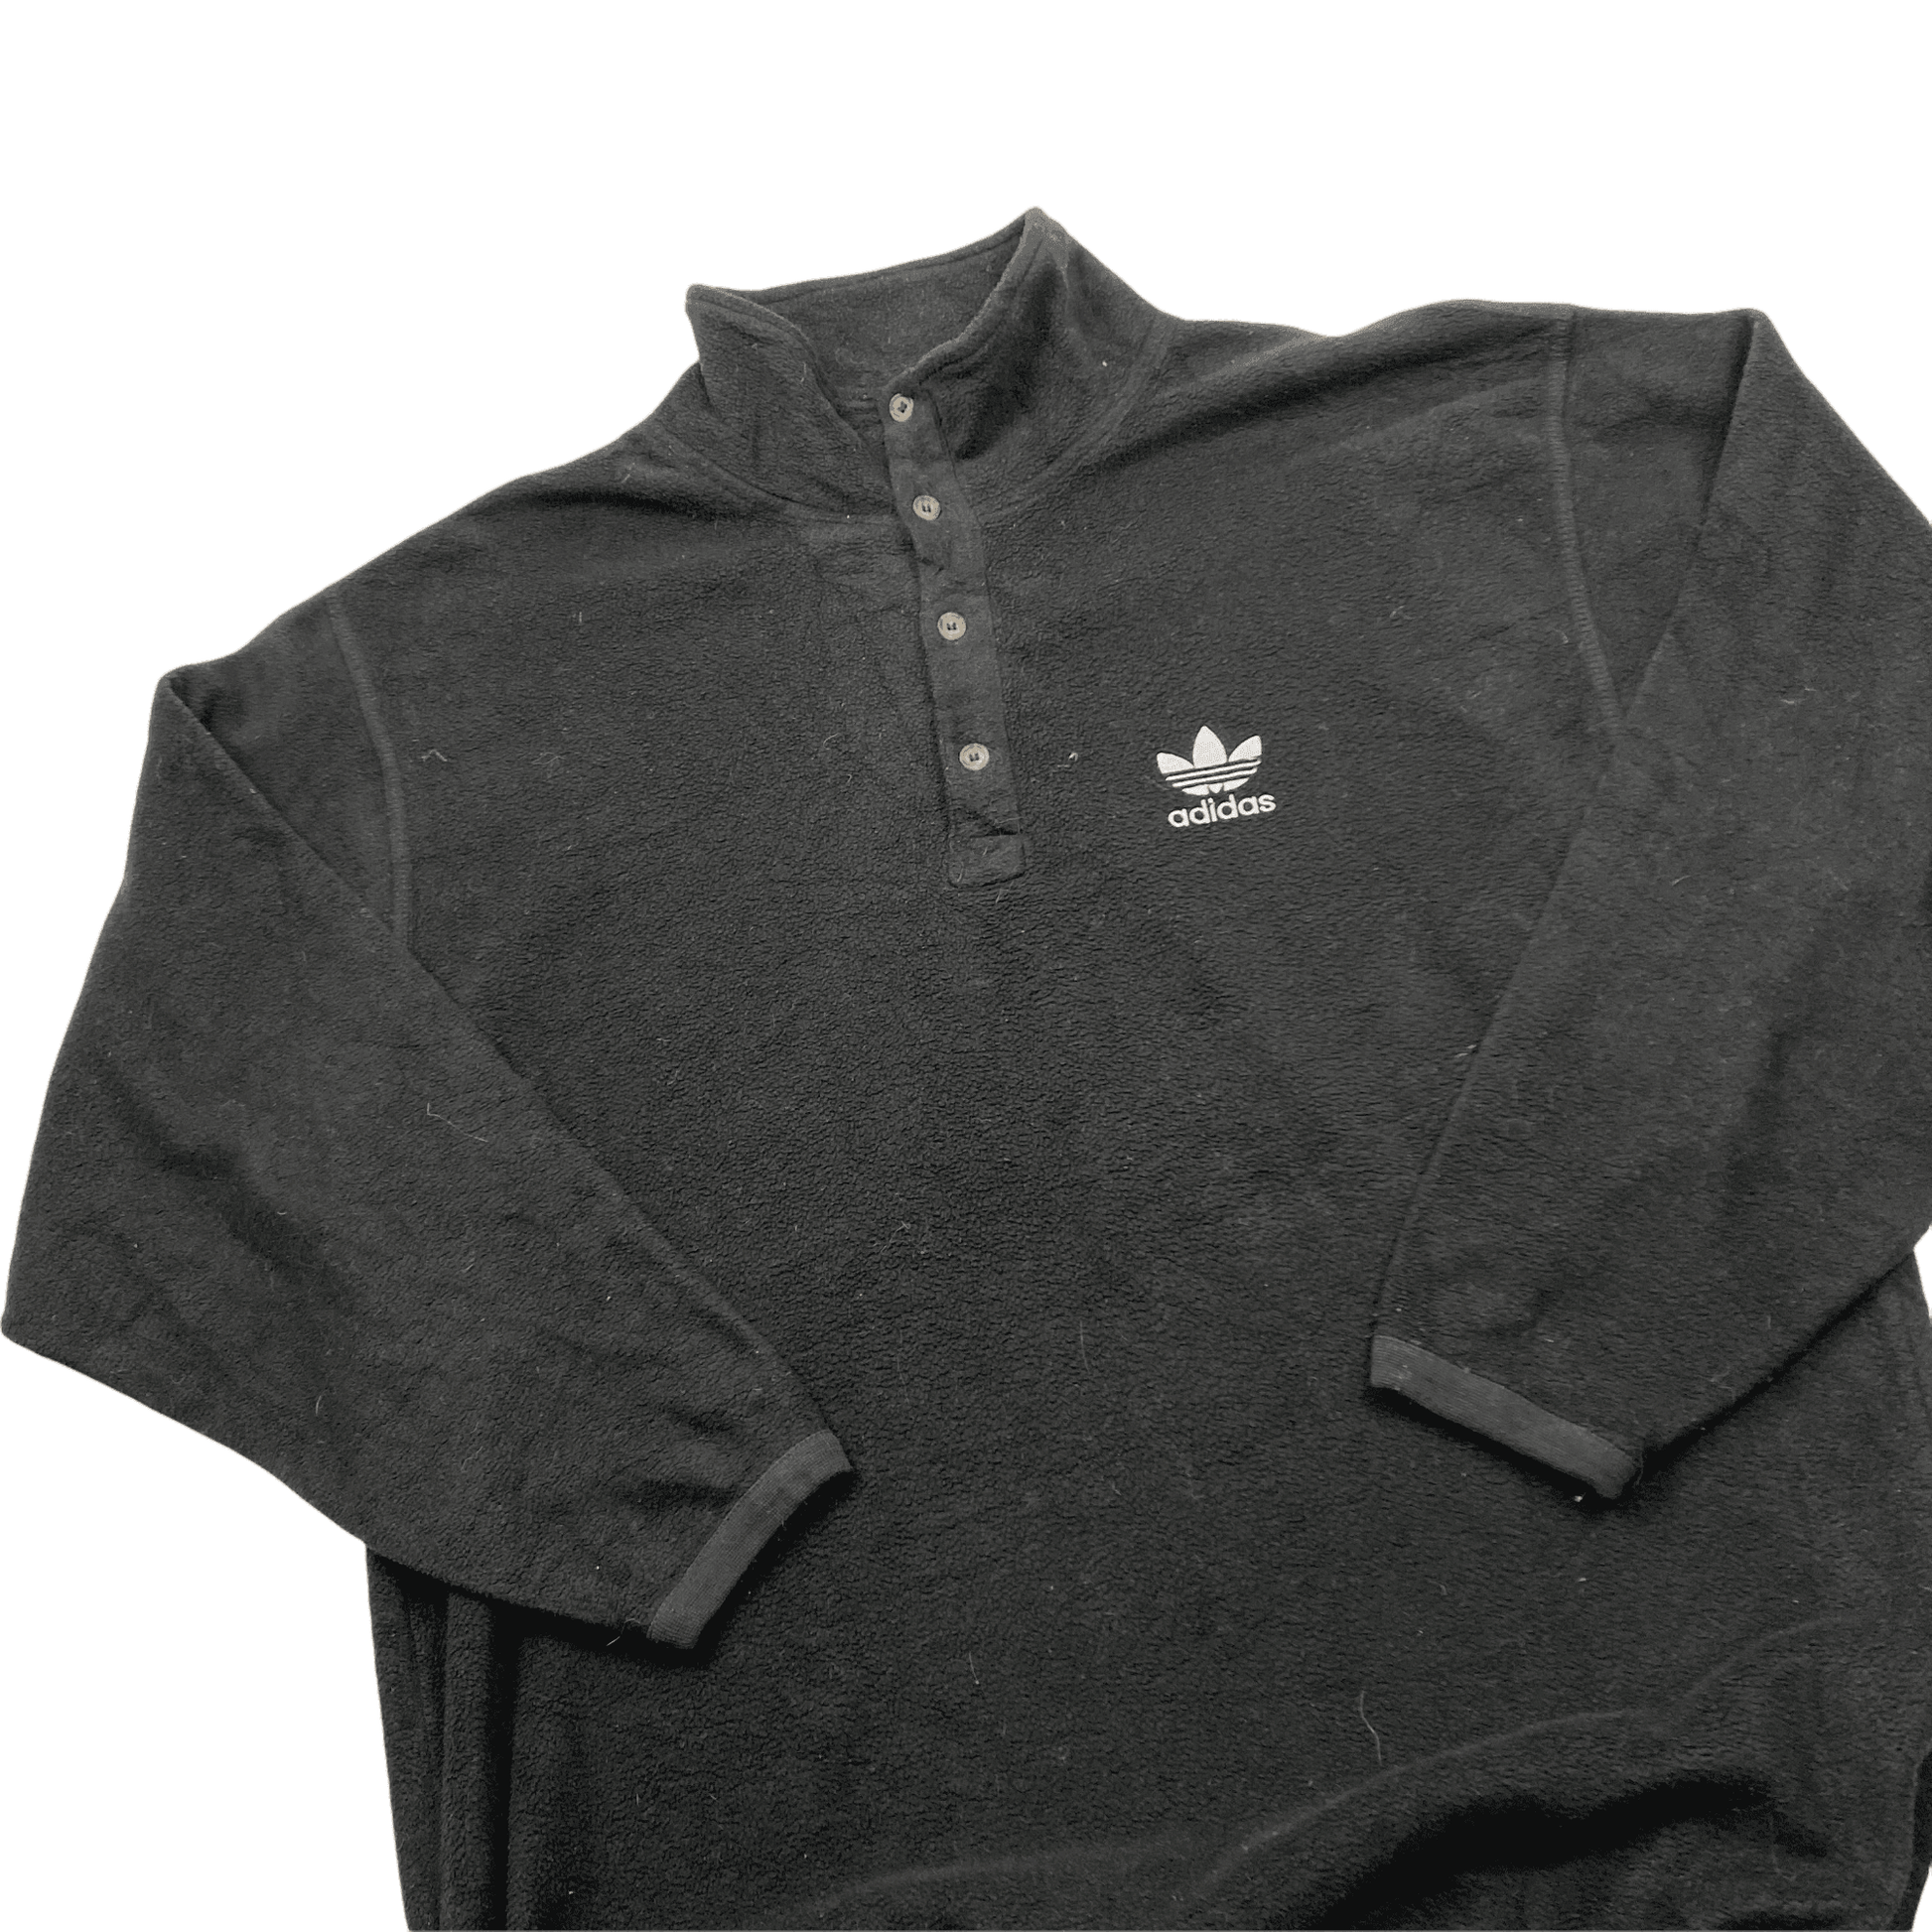 Vintage 90s Black Adidas Fleece Sweatshirt - Extra Large - The Streetwear Studio